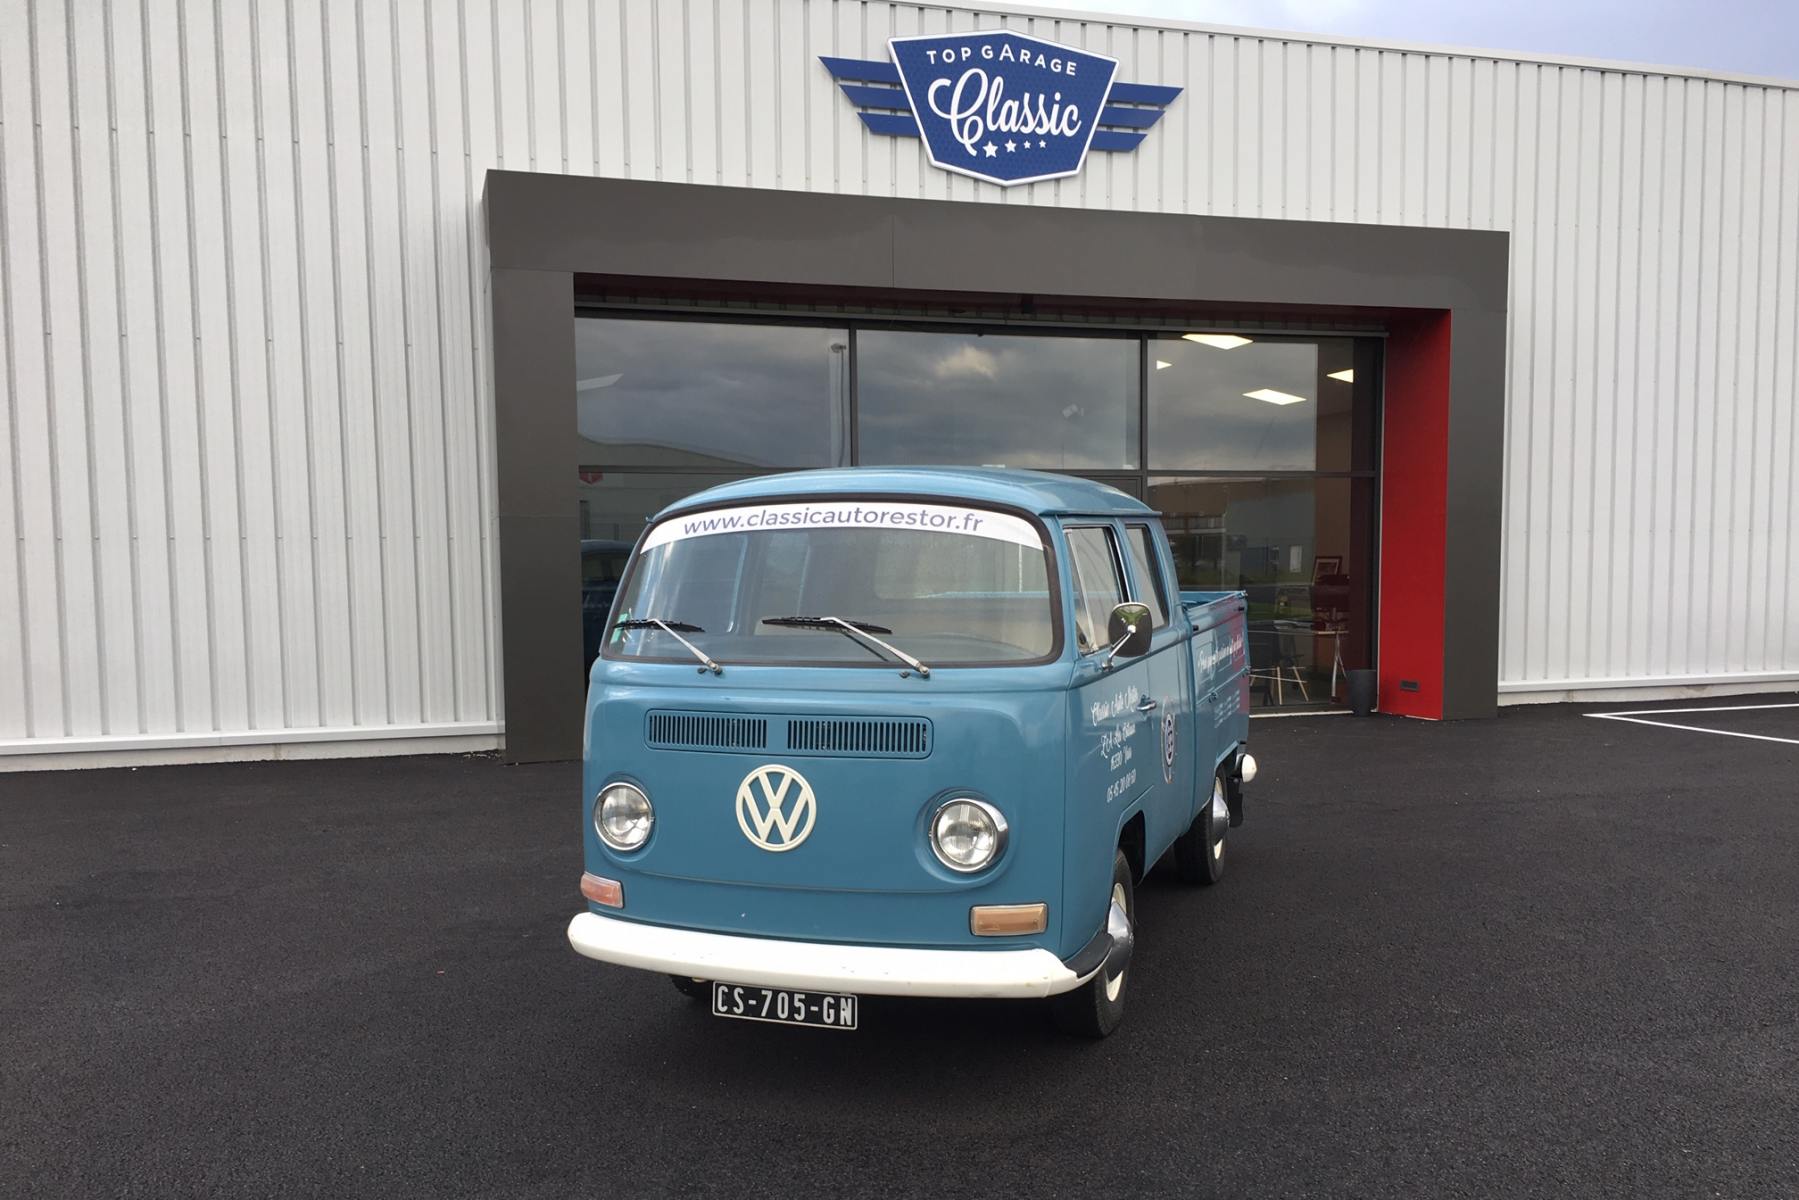 Vente-annonce-Volkswagen-Combi Pick-up 6 Places-classic-auto-restor